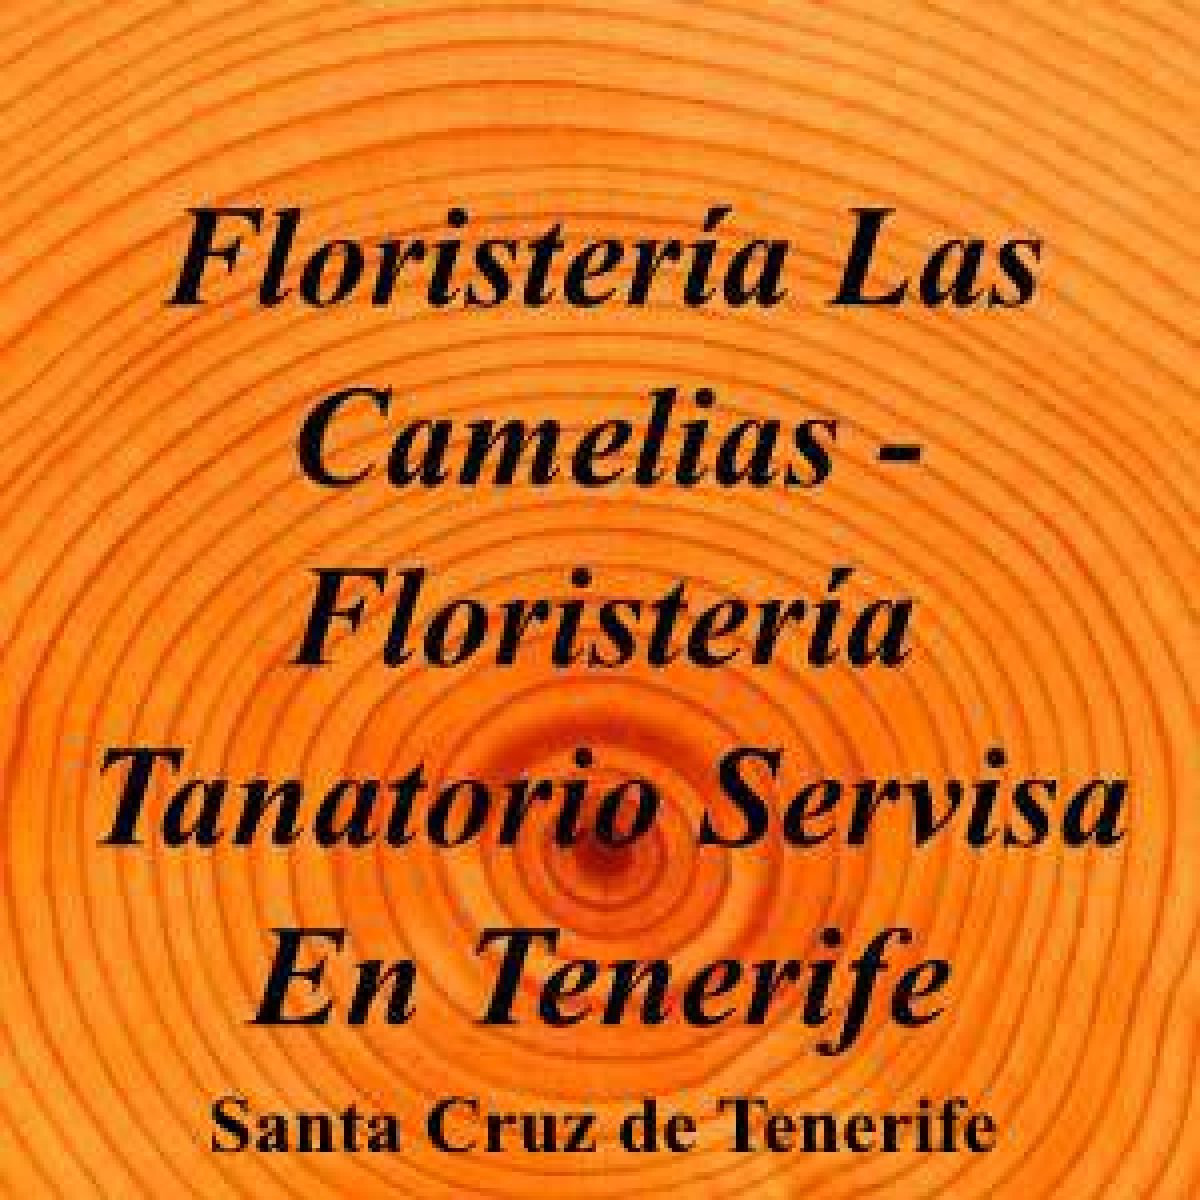 Floristería Las Camelias - Floristería Tanatorio Servisa En  Tenerife〖Funeraria〗